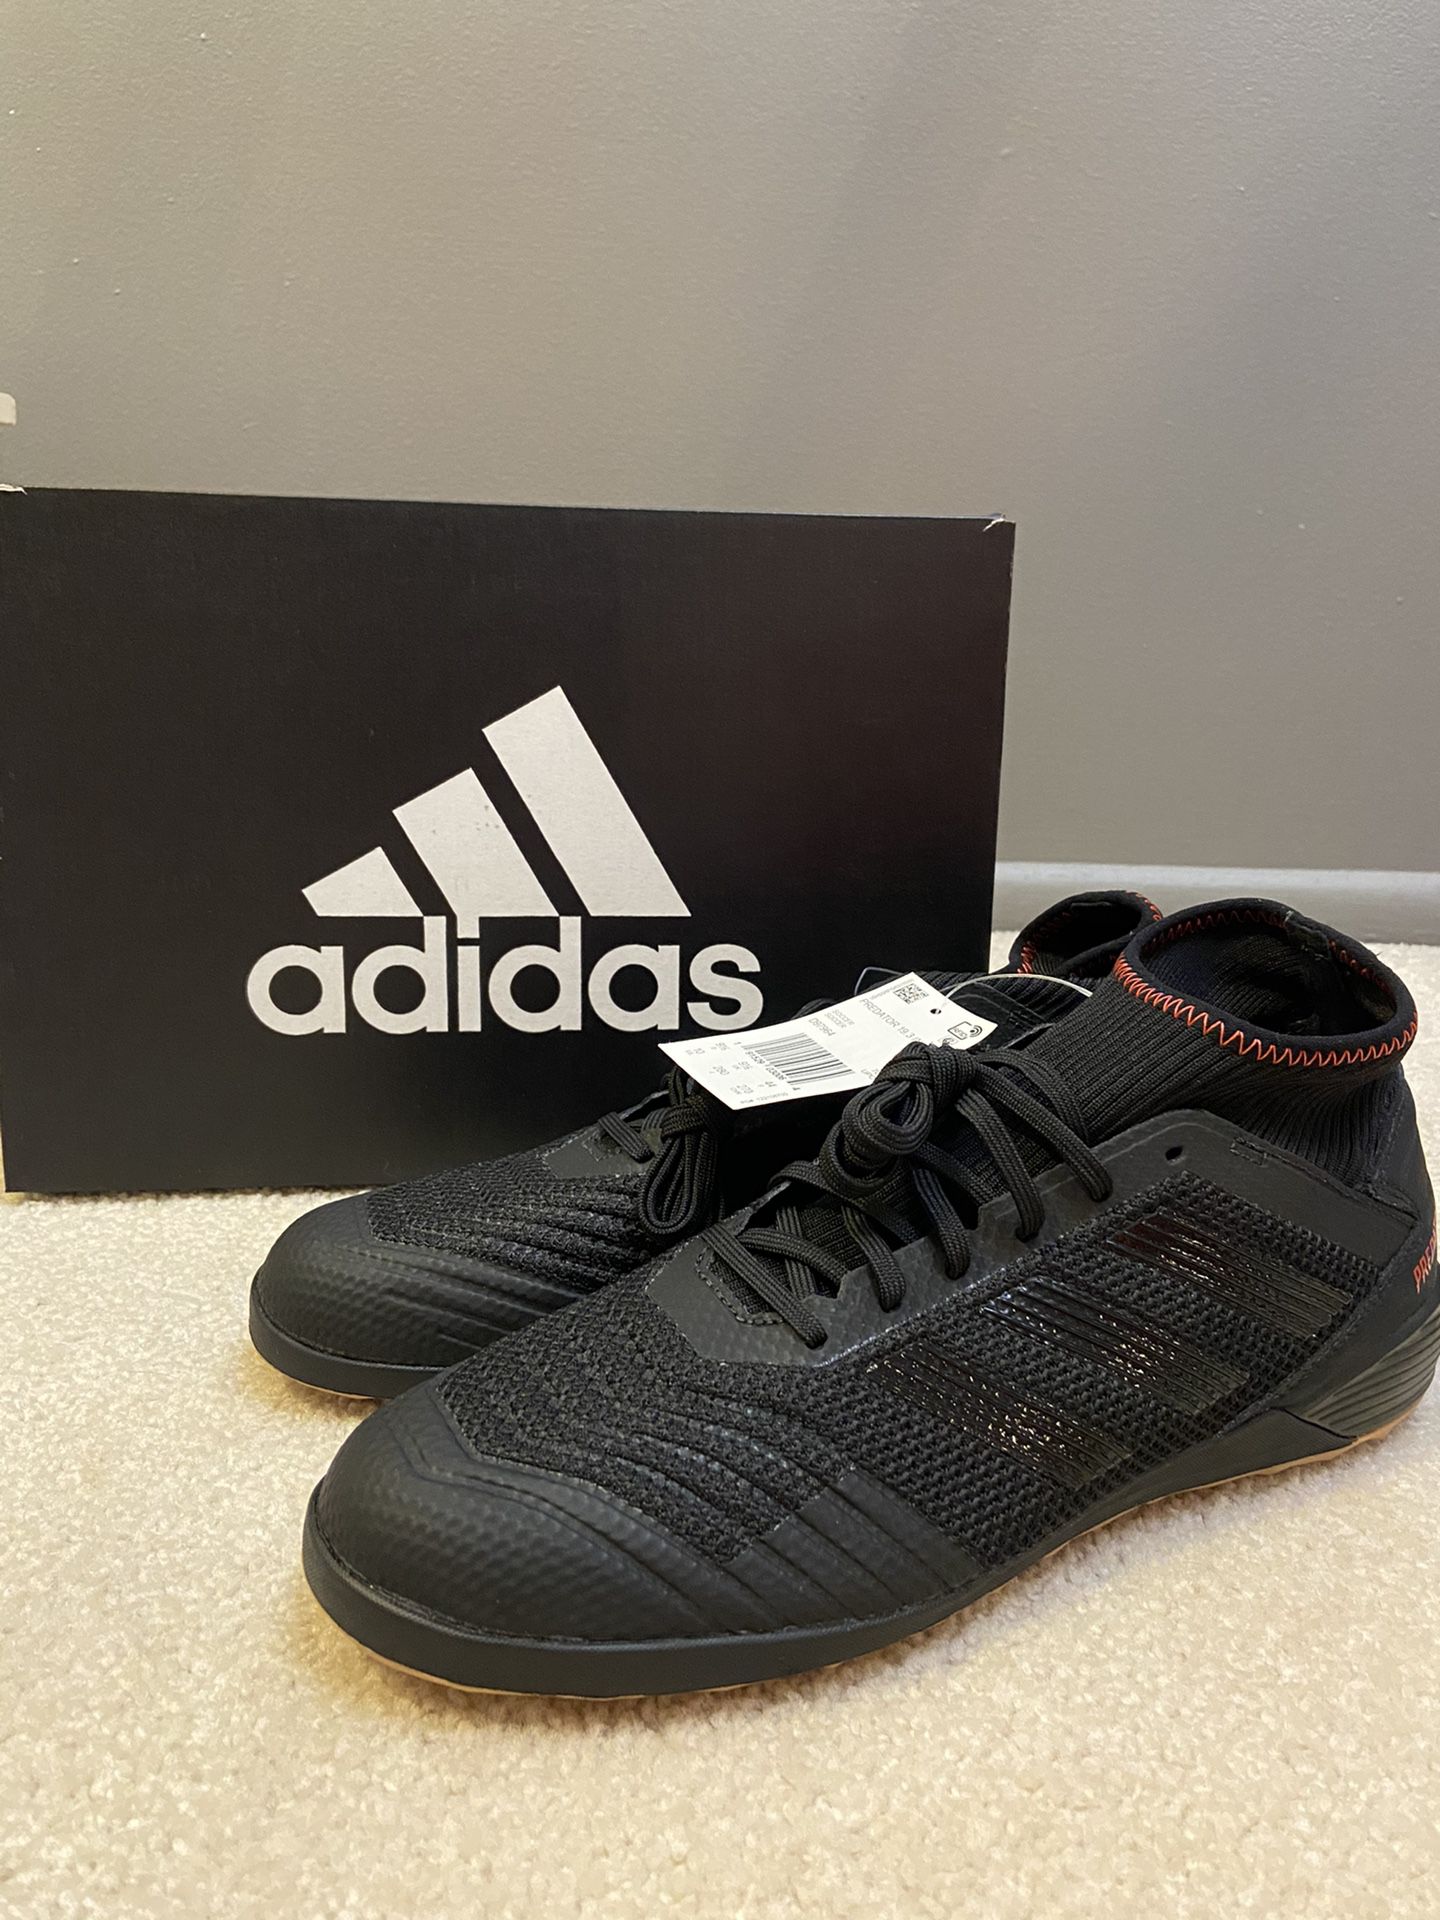 Adidas Mens Predator 19.3 Black Indoor Soccer Shoes D97964 Sz 8 8.5 NEW IN BOX